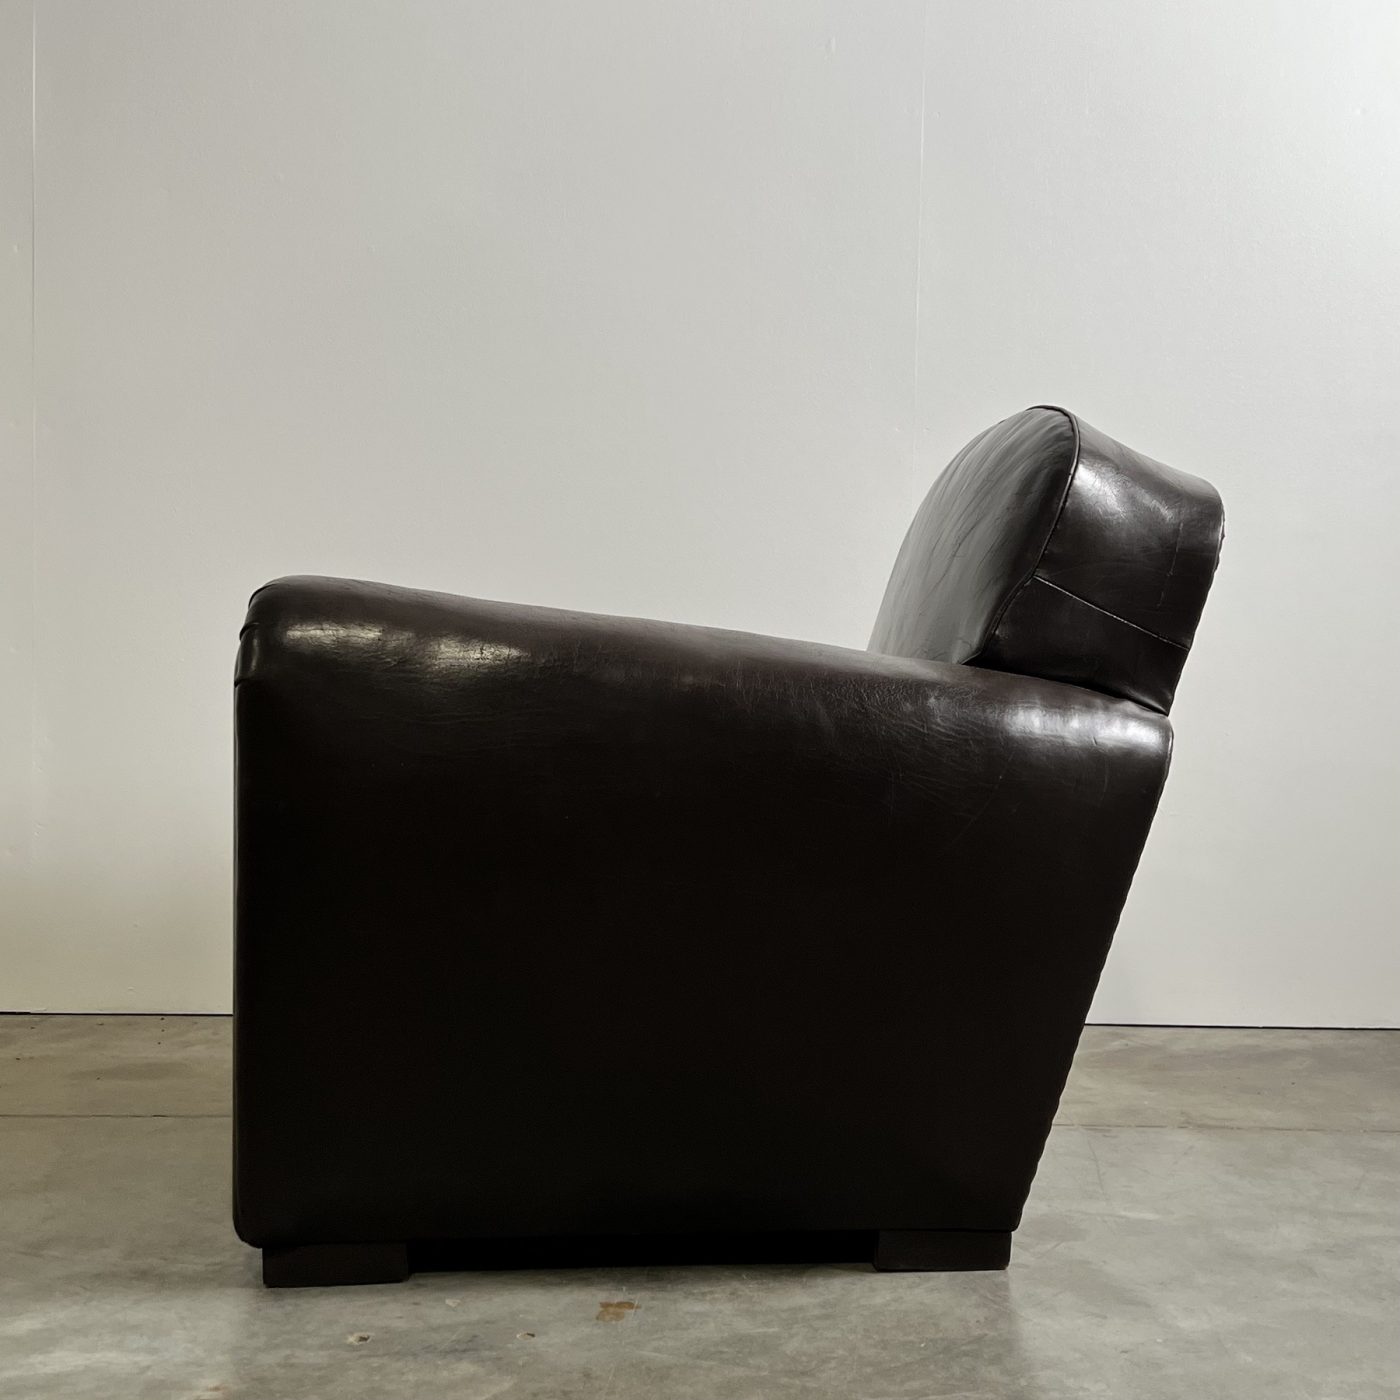 objet-vagabond-leather-armchairs0000